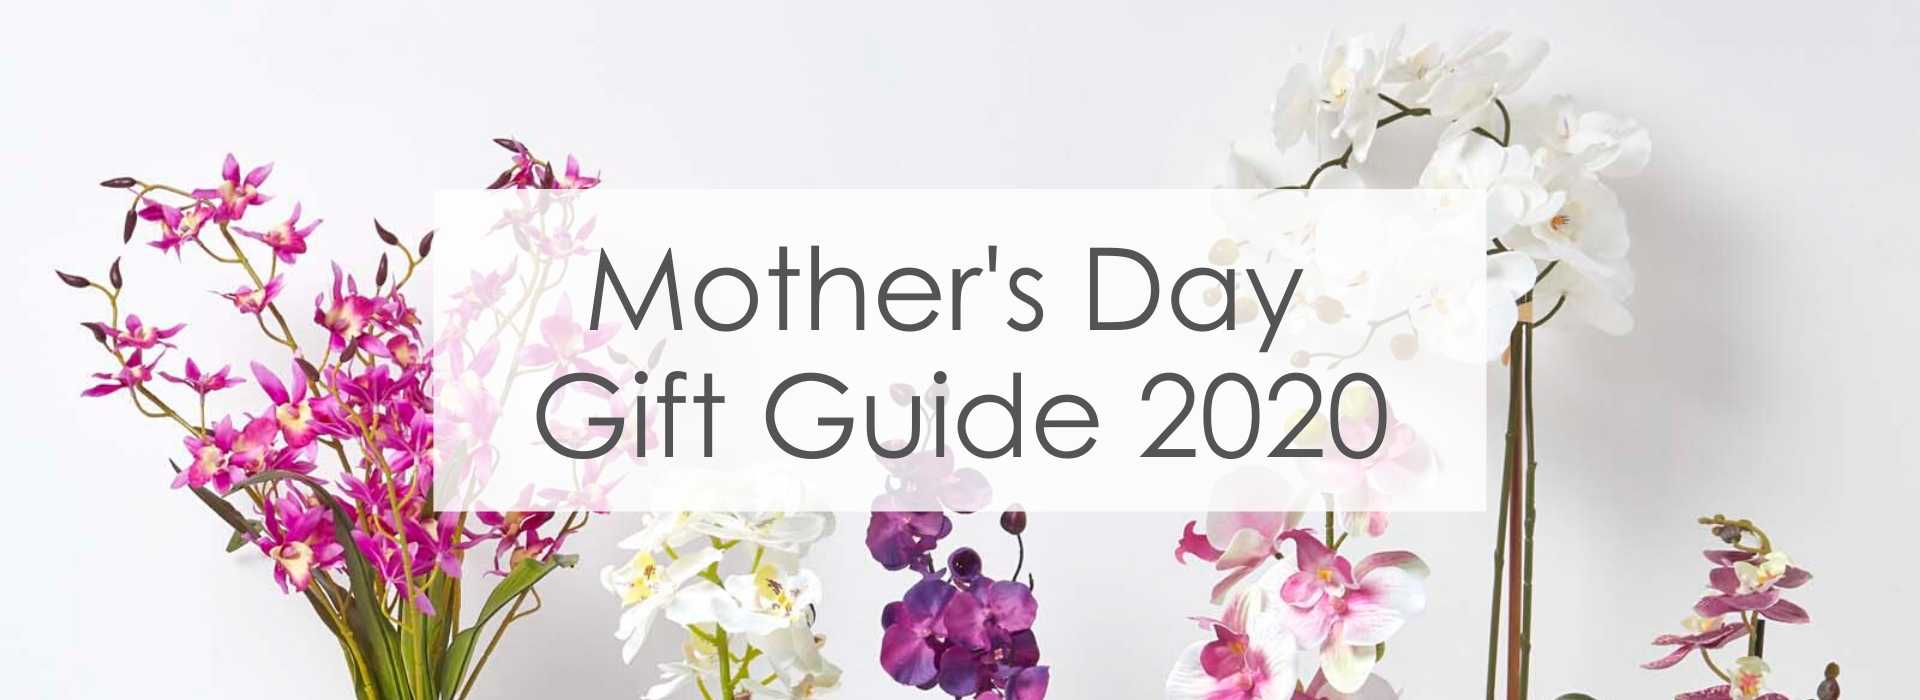 gift guide 2020